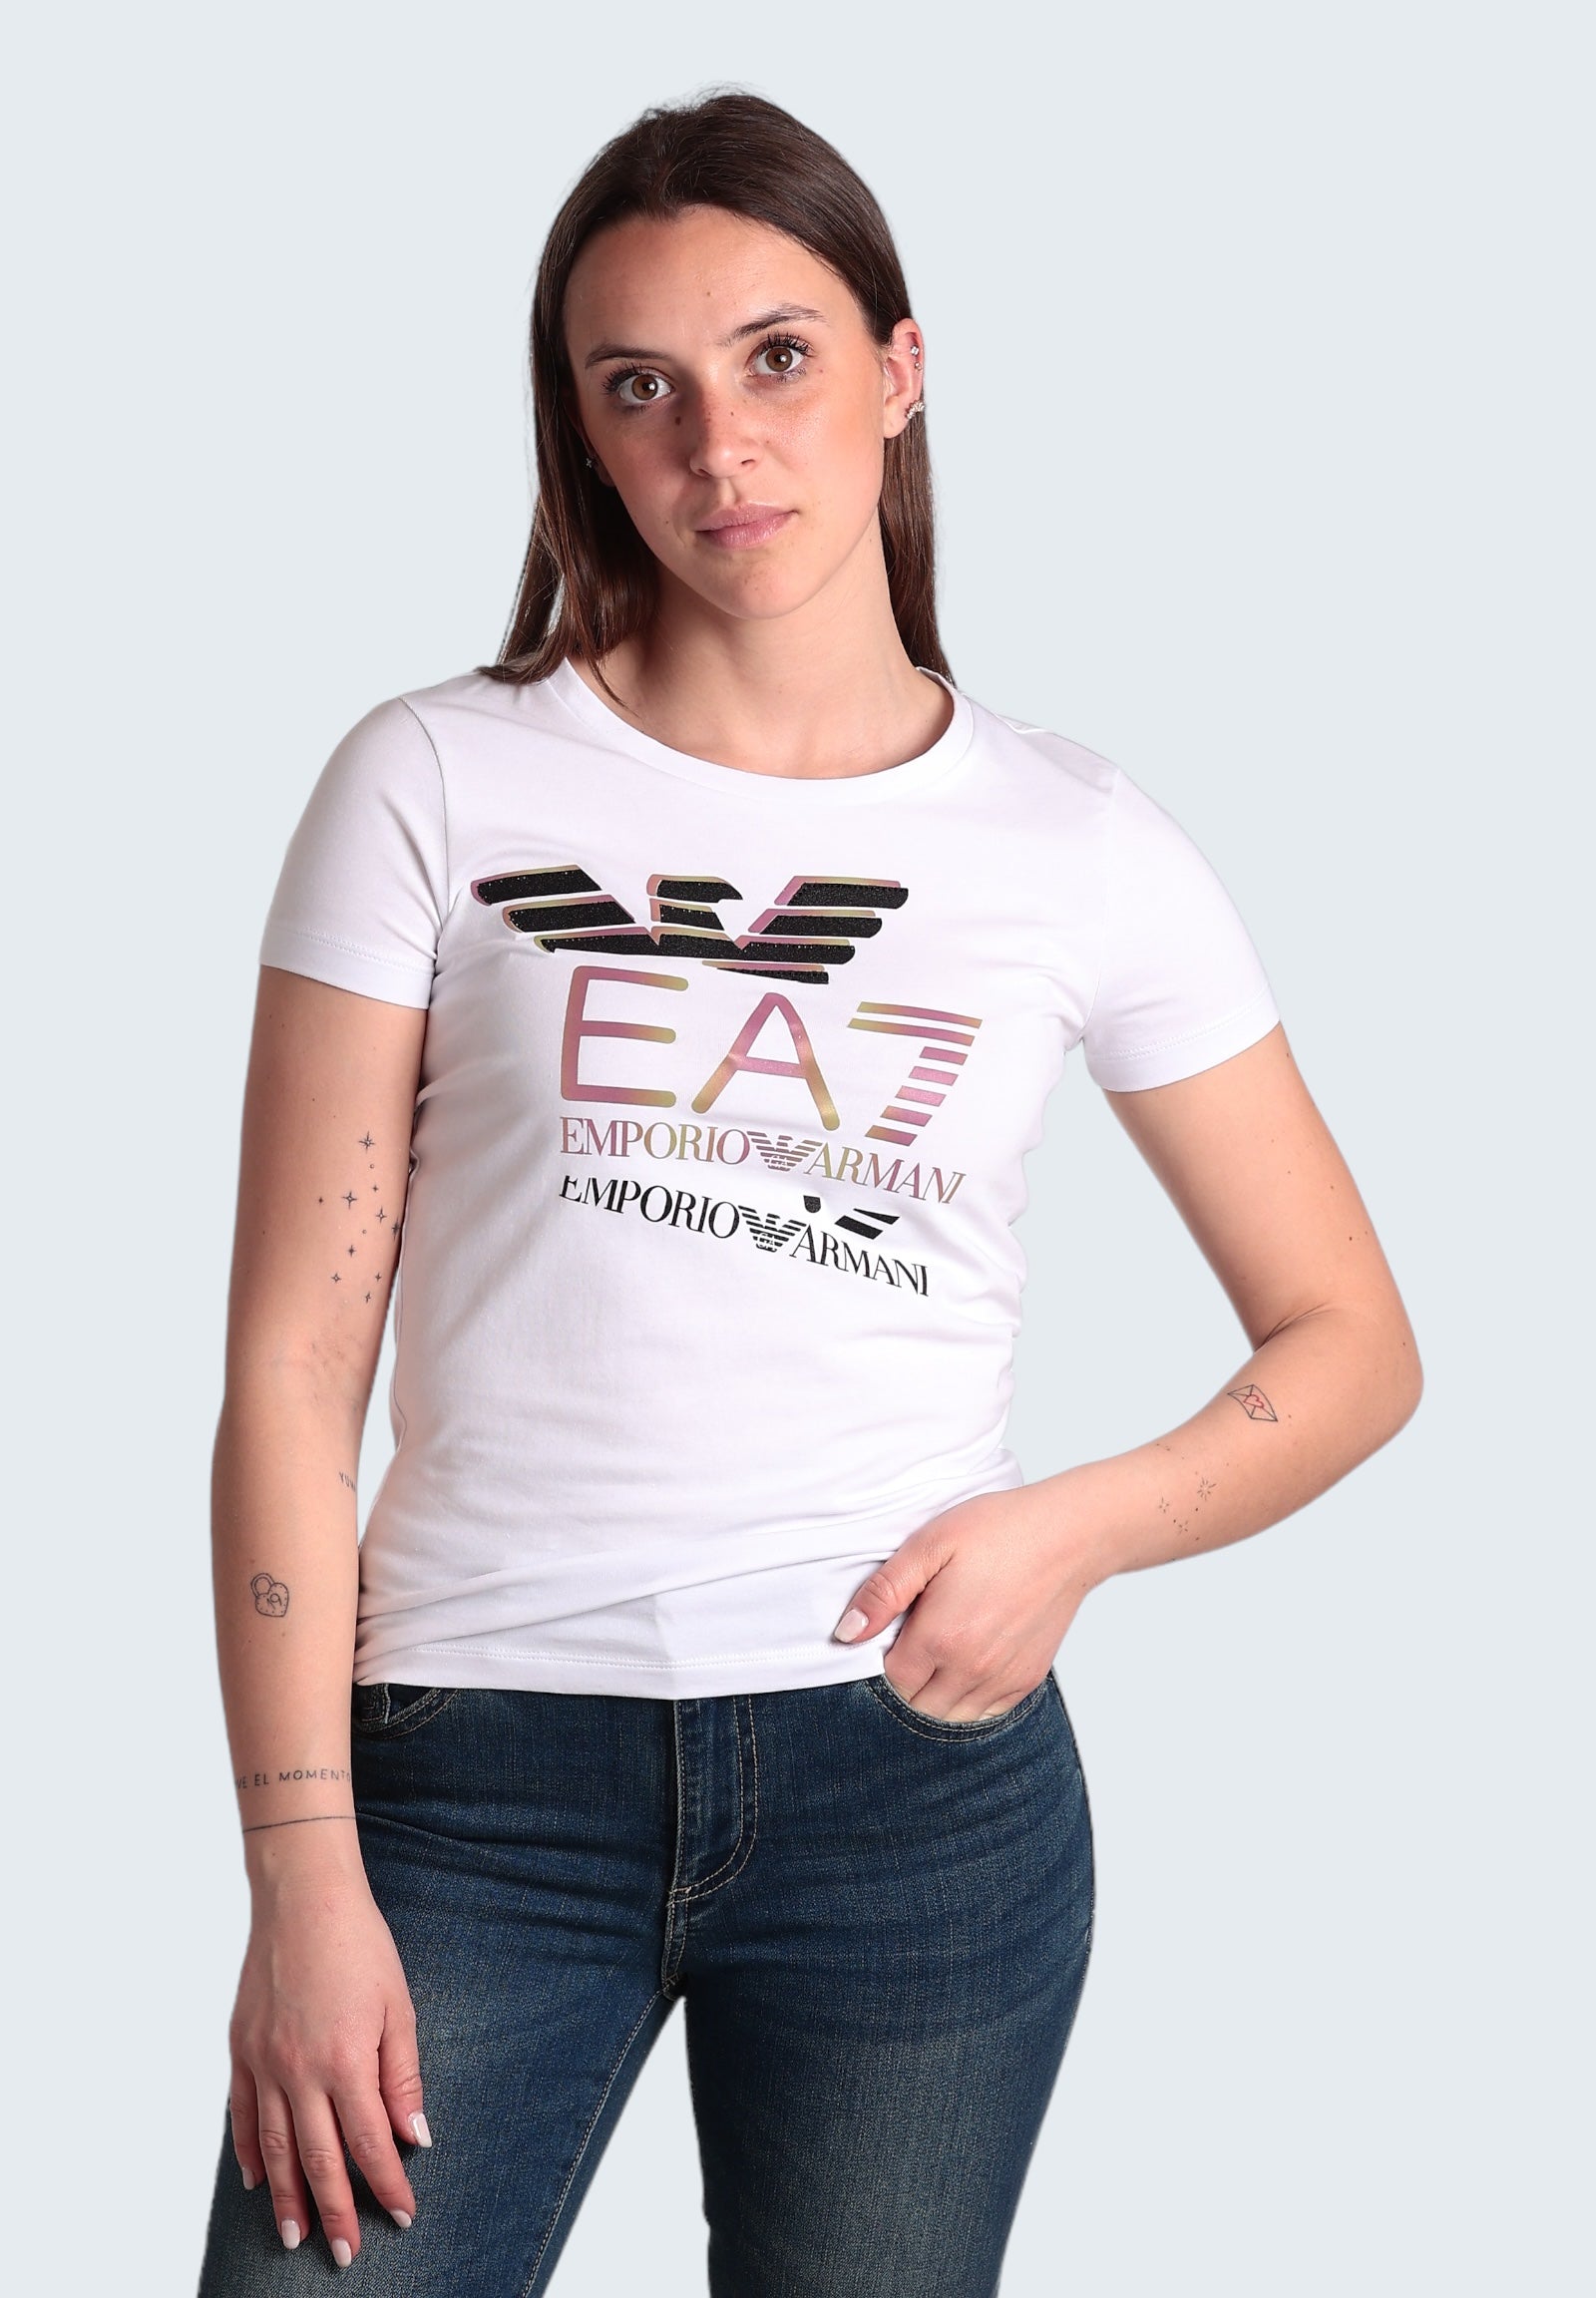 Ea7 Emporio Armani T-Shirt 3dtt30 White